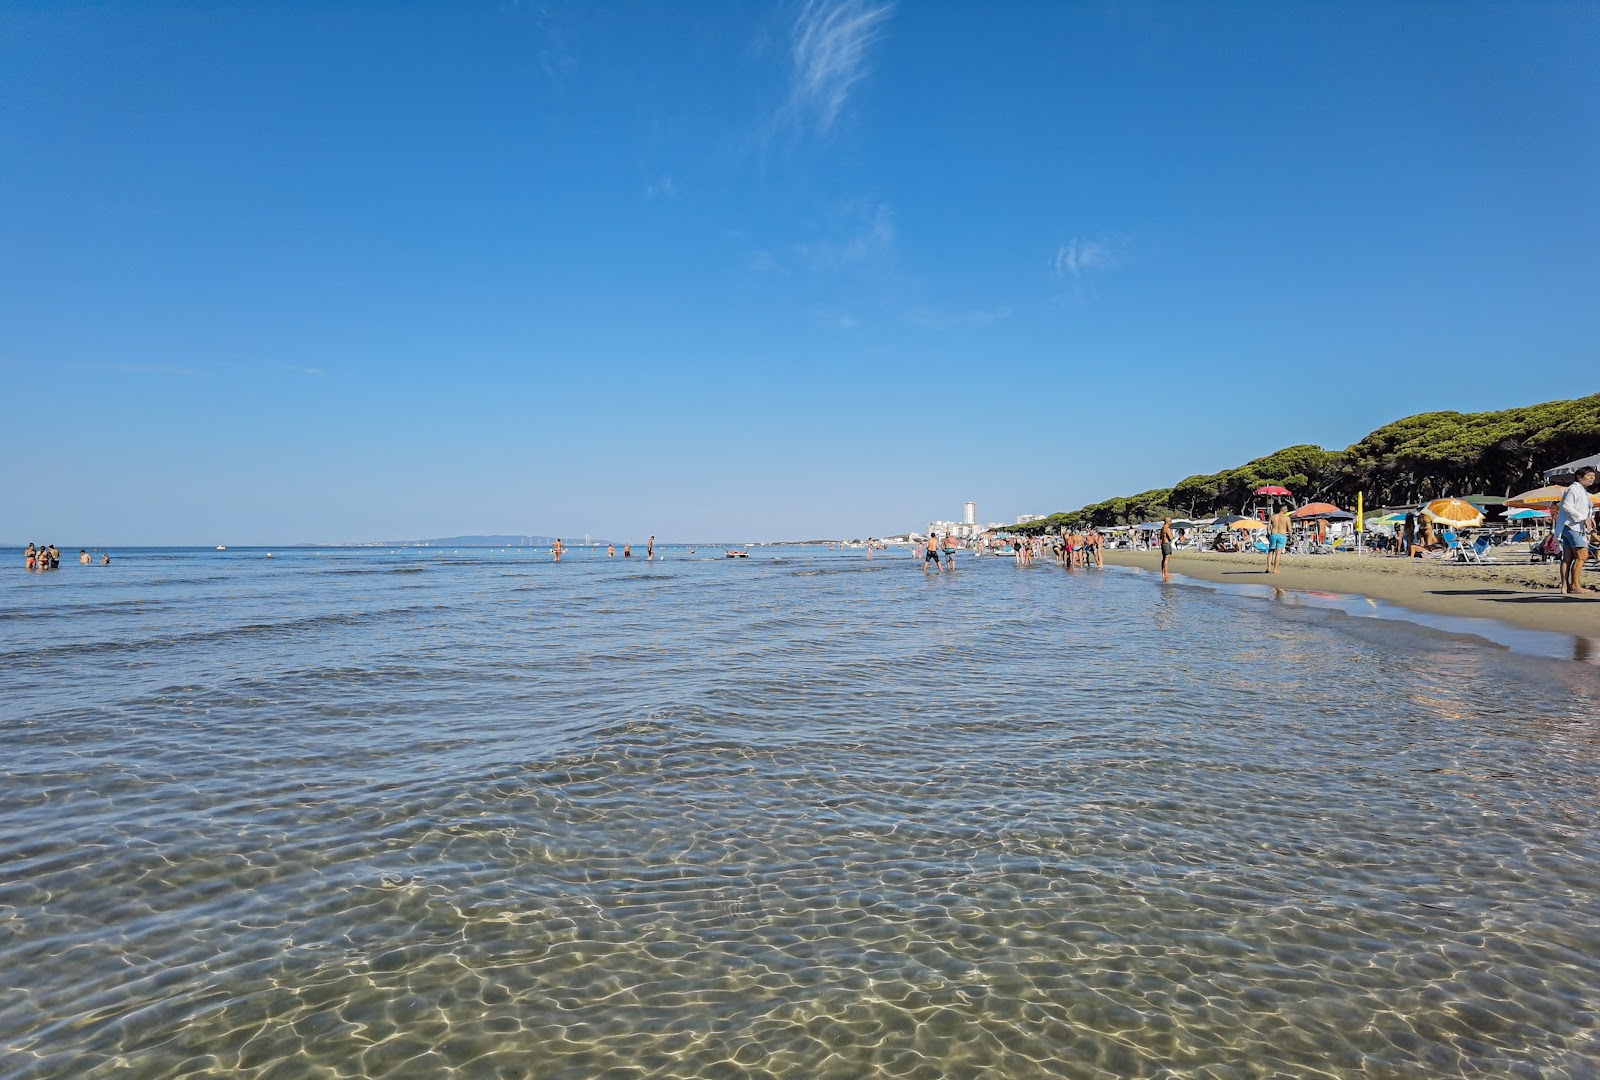 Foto av Spiaggia di Follonica med ljus sand yta